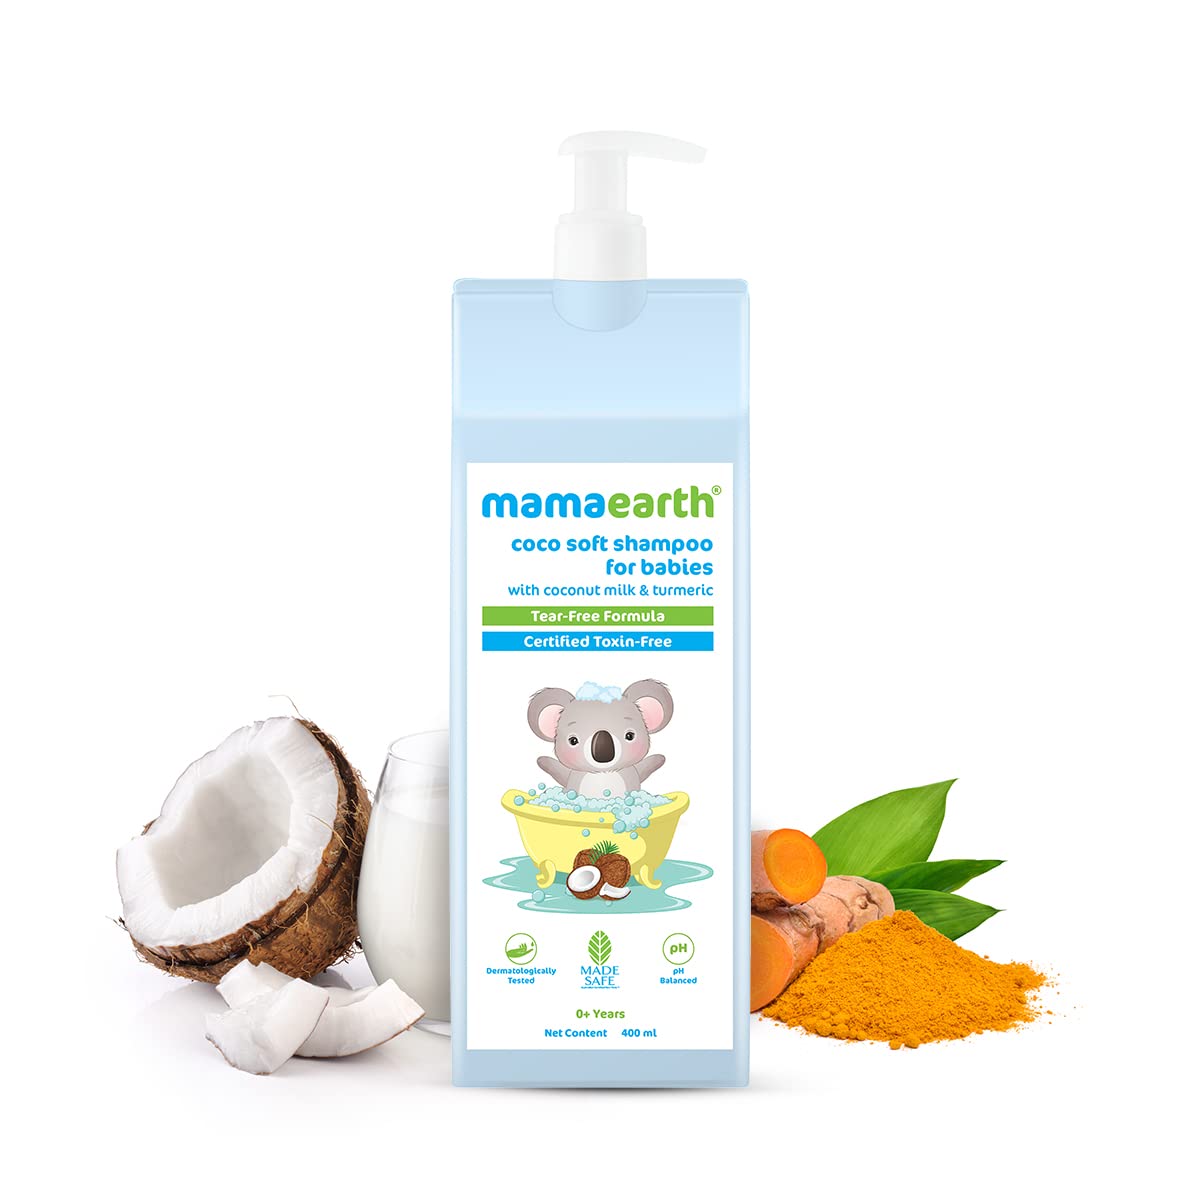 Mamaearth Coco Soft Shampoo with Coconut Milk & Turmeric for Babies